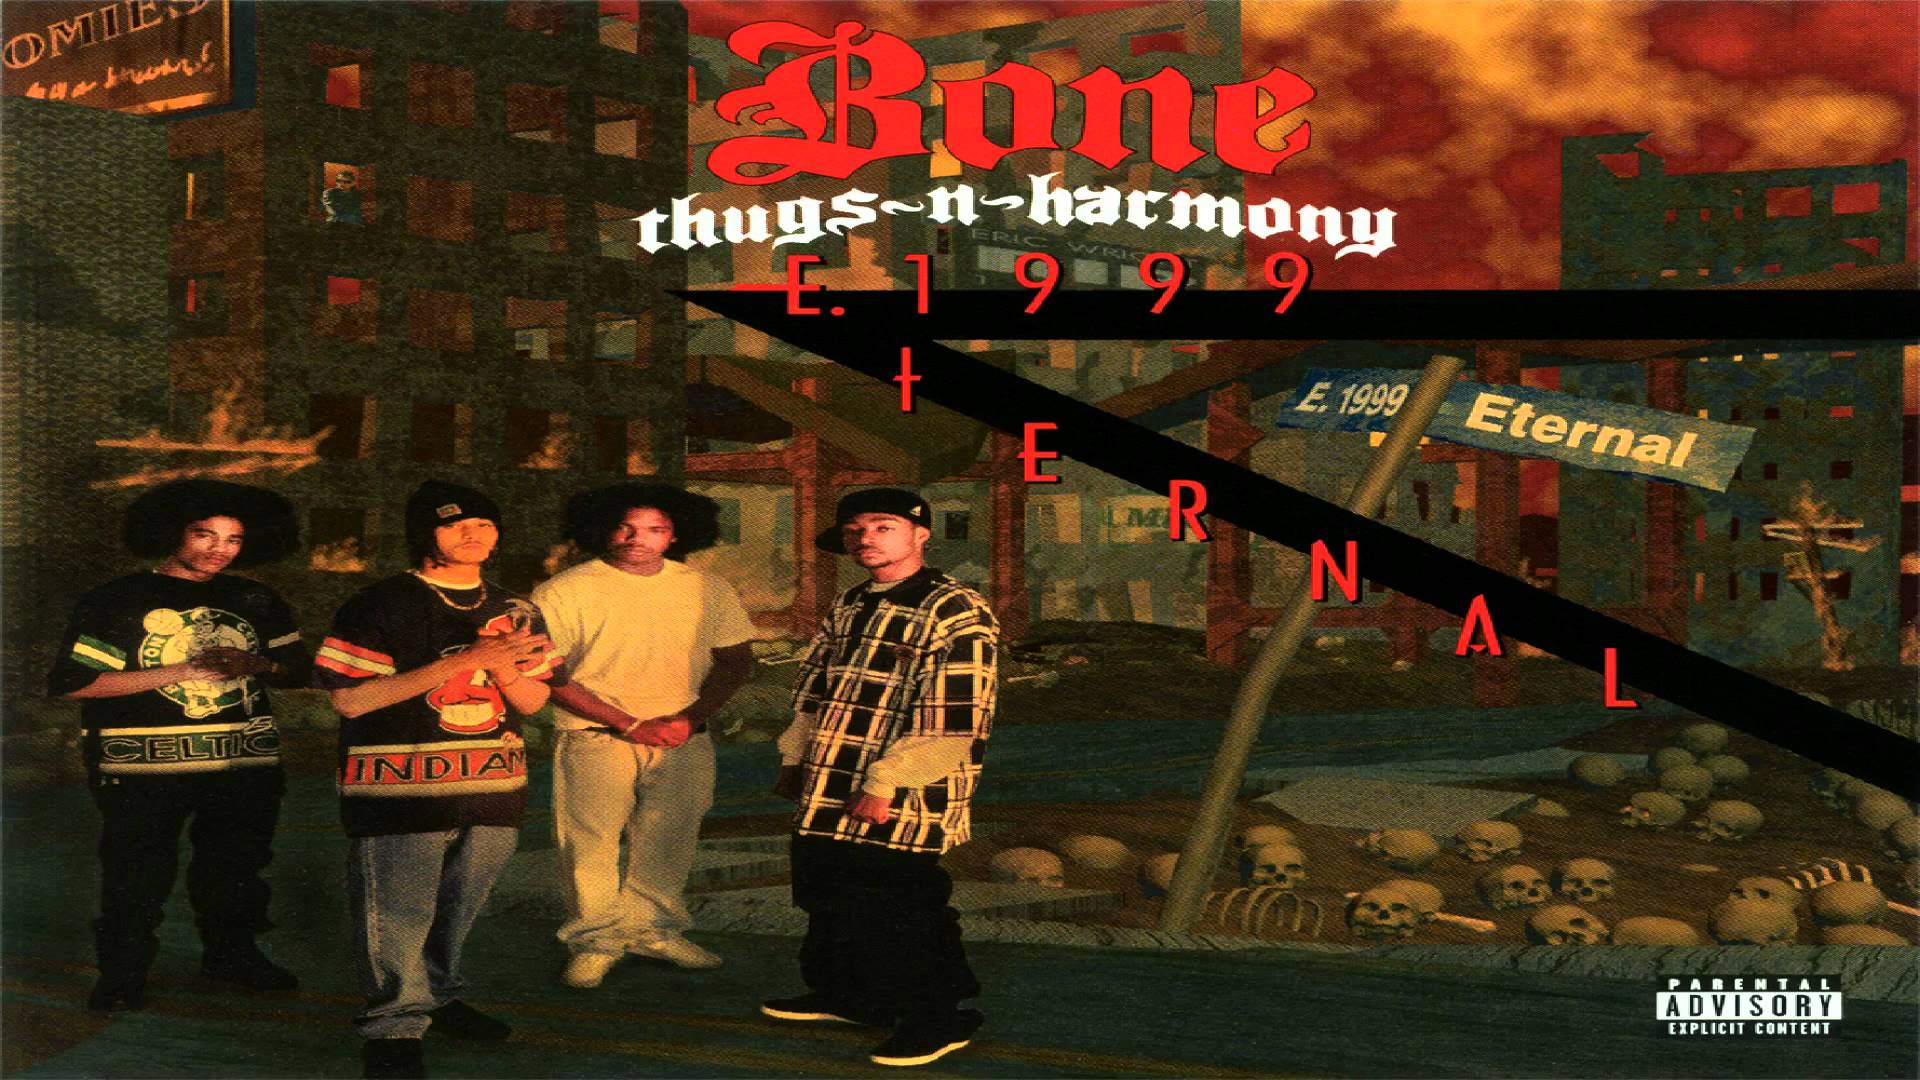 Bone Thugs-N-Harmony Wallpapers